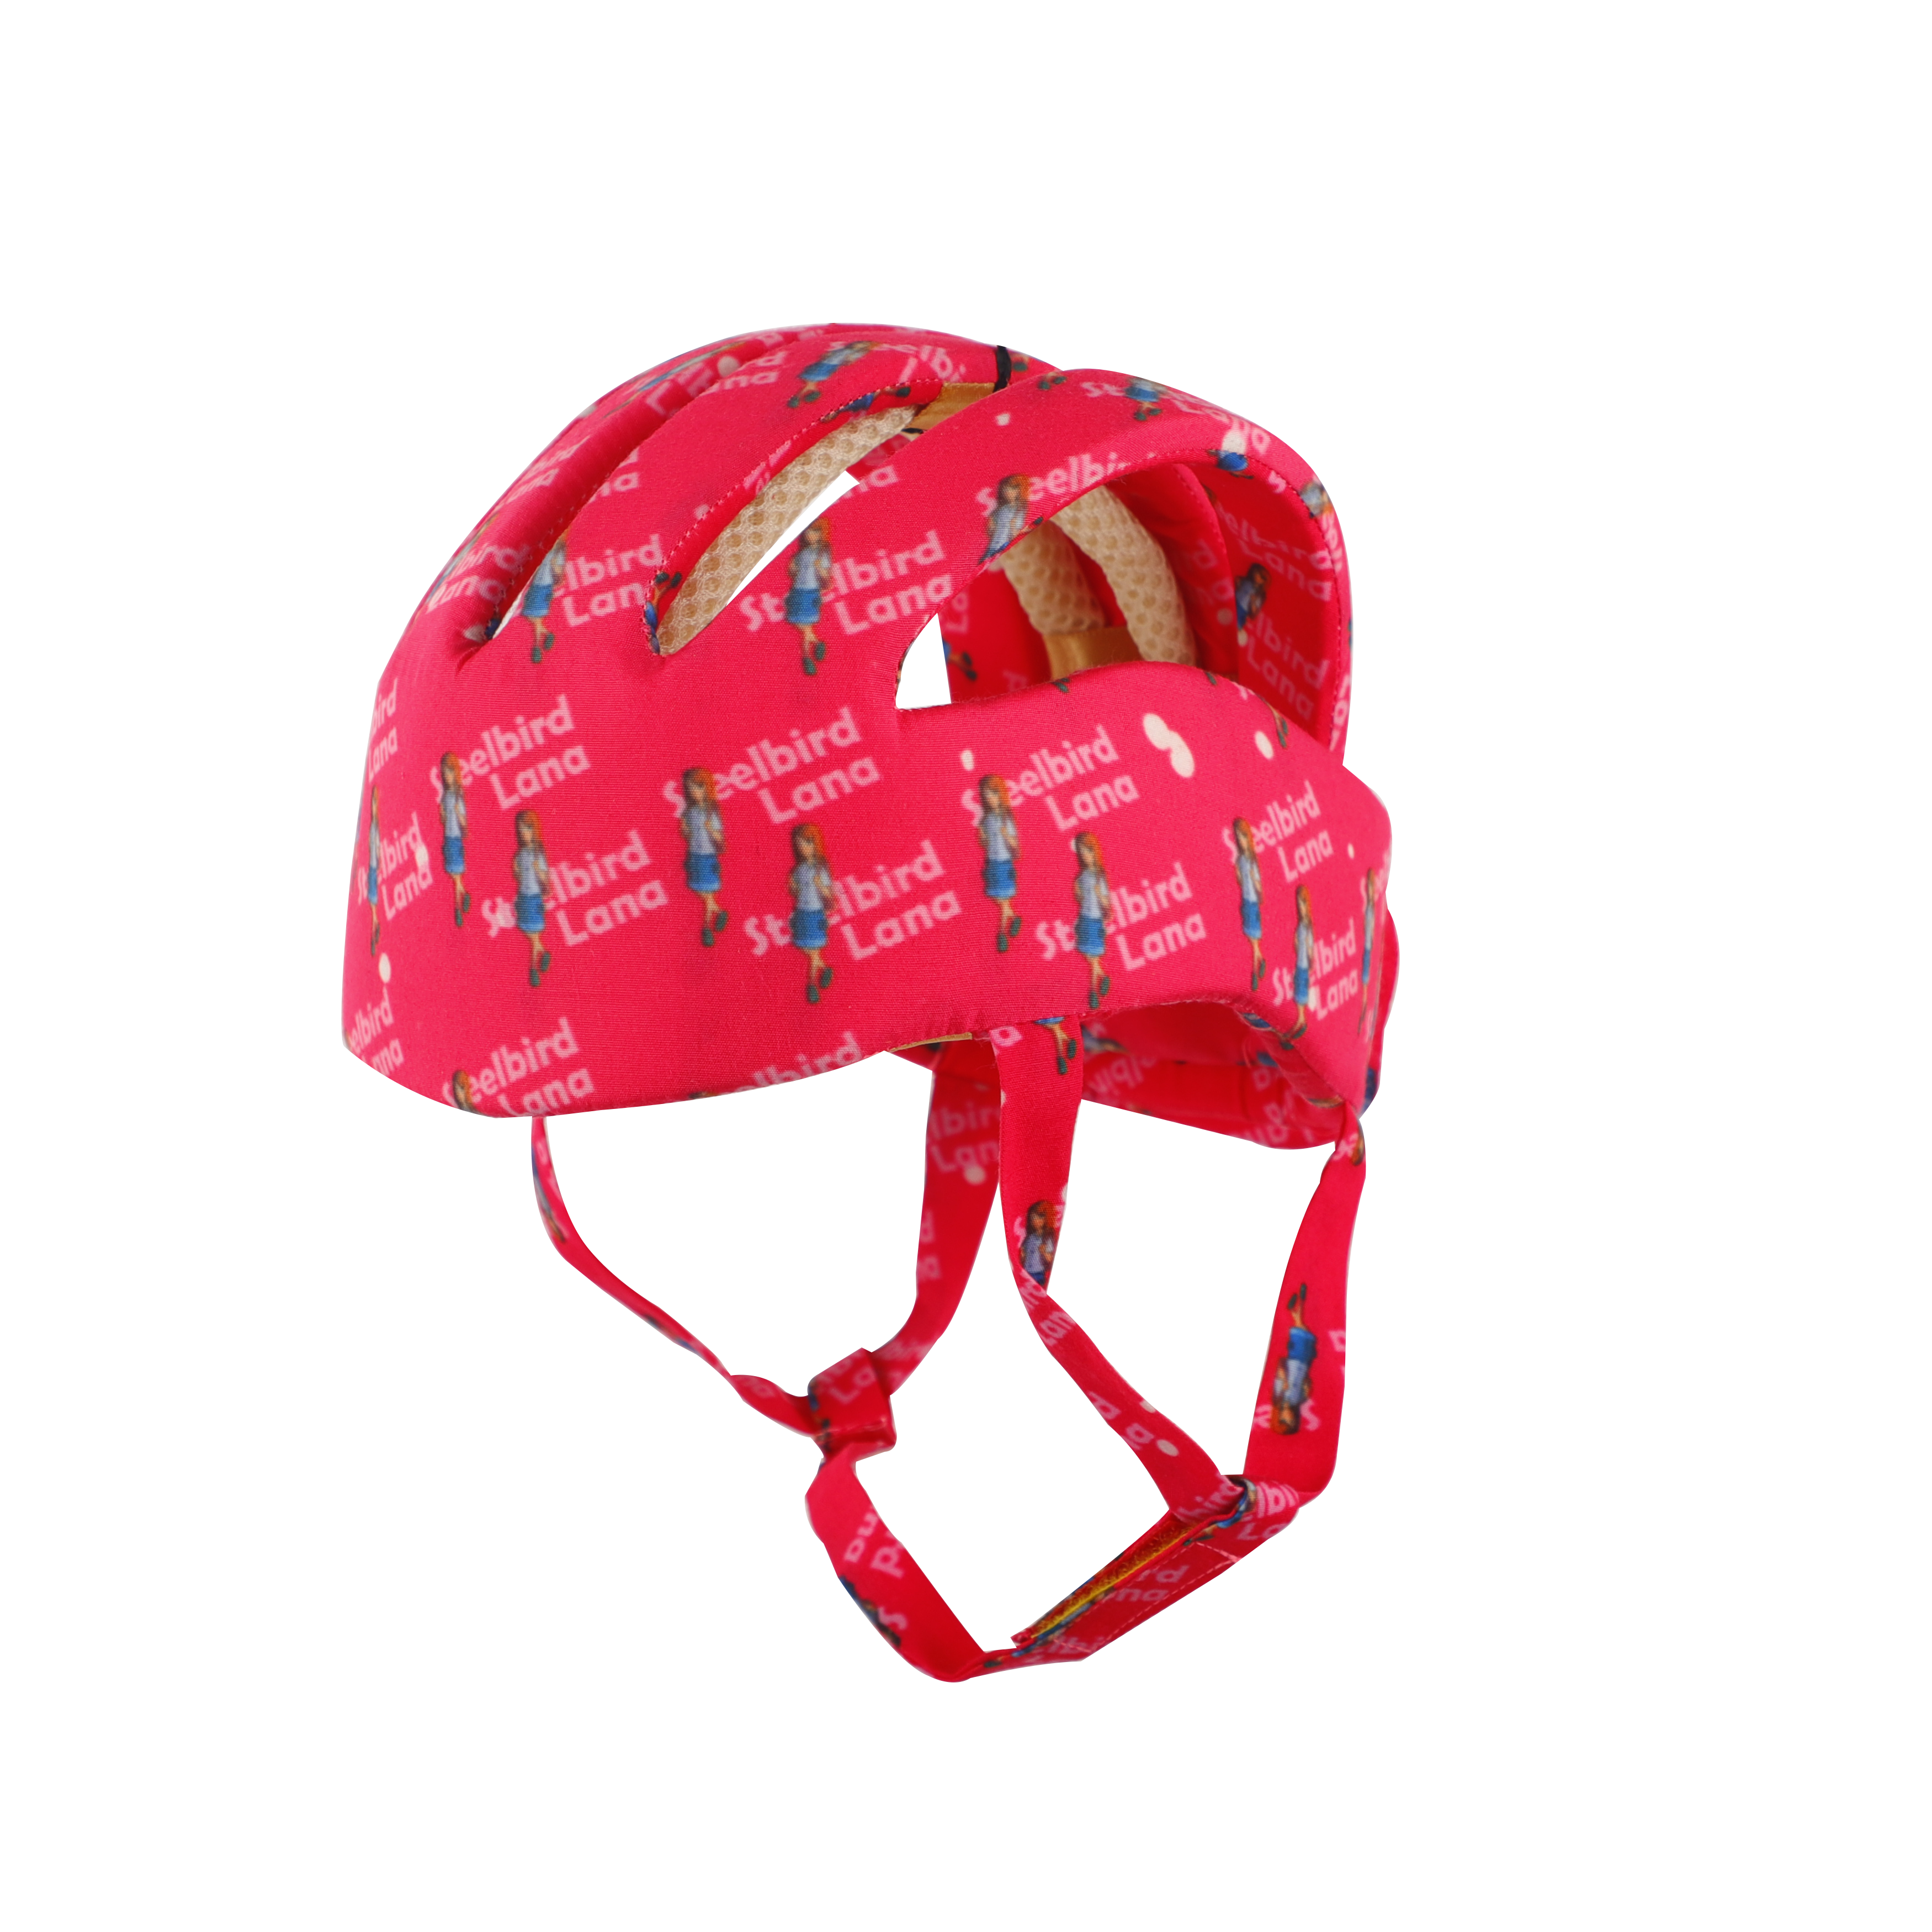 Steelbird Kids Safety Helmet, Toddler Safety Helmet Adjustable + Knee Guards For Kids | Protective Gear Set For Skateboard, Bike, Roller Skating, Cycling, Scooter. (Baby Pink)